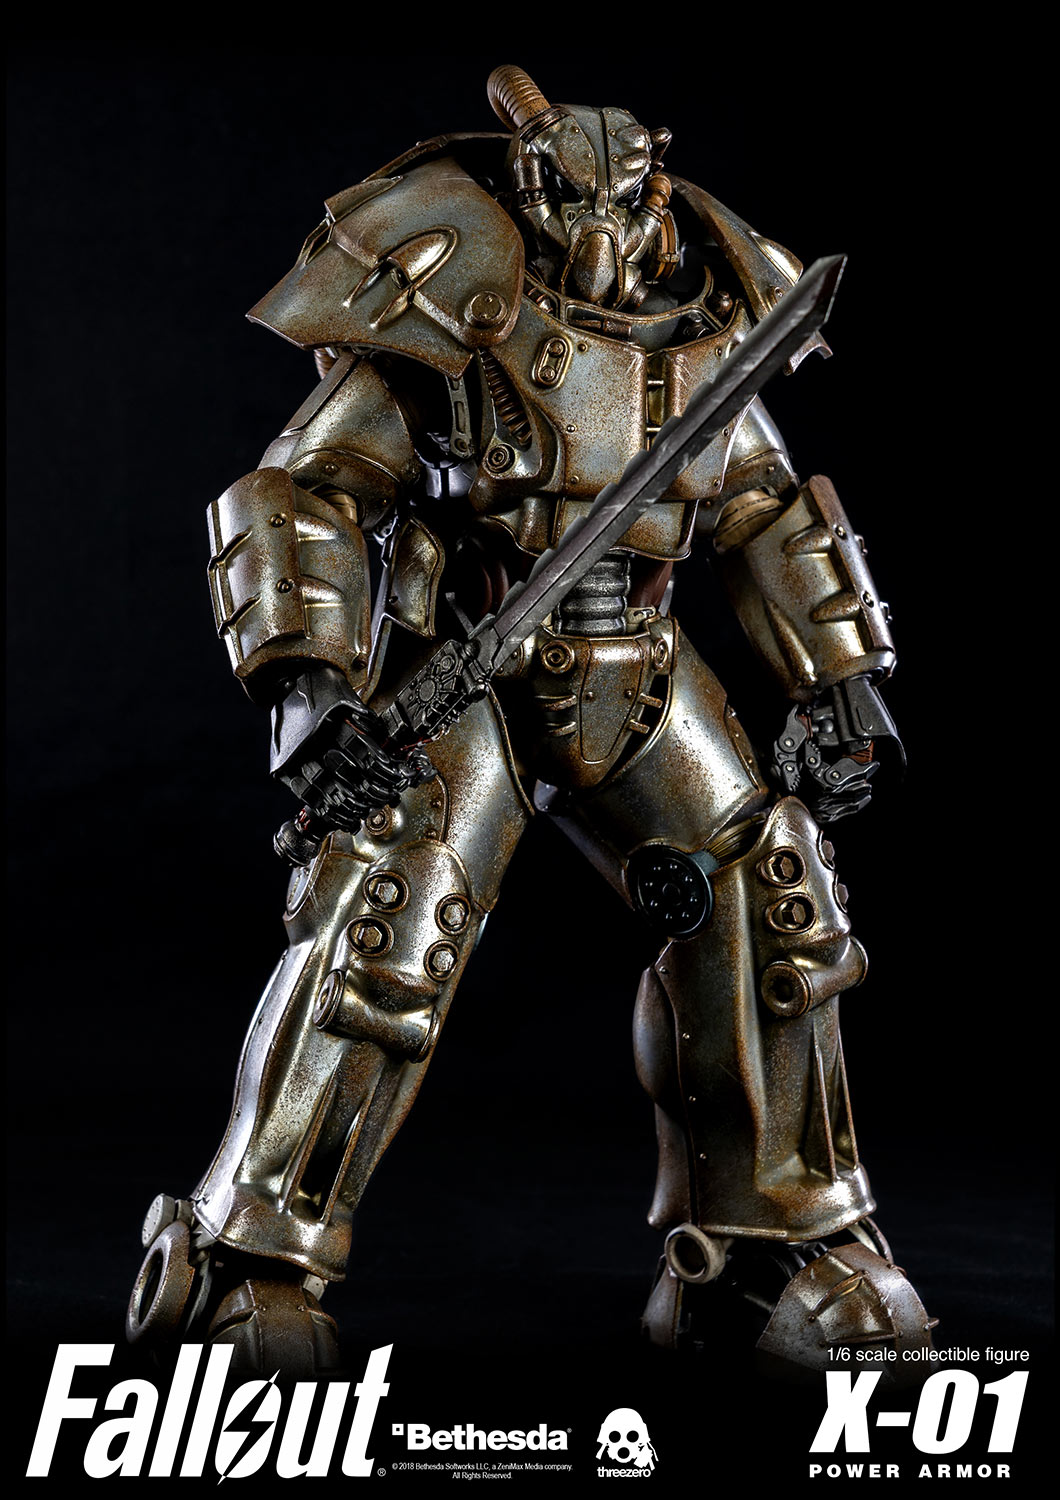 Fallout, X-01 Power Armor